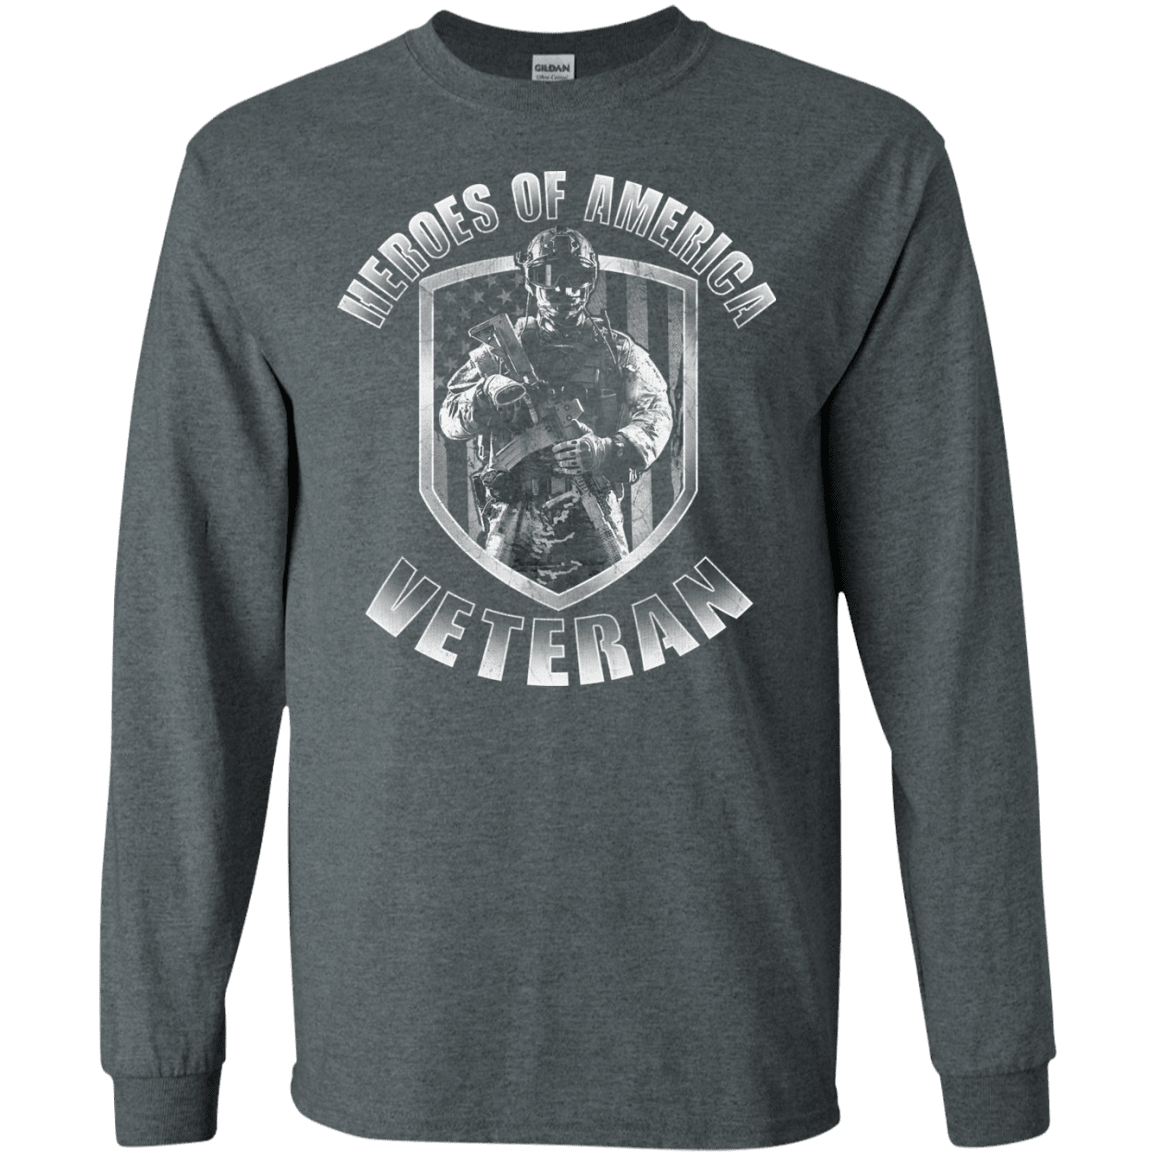 Military T-Shirt "Veterans - Heroes Of America Men" Front-TShirt-General-Veterans Nation